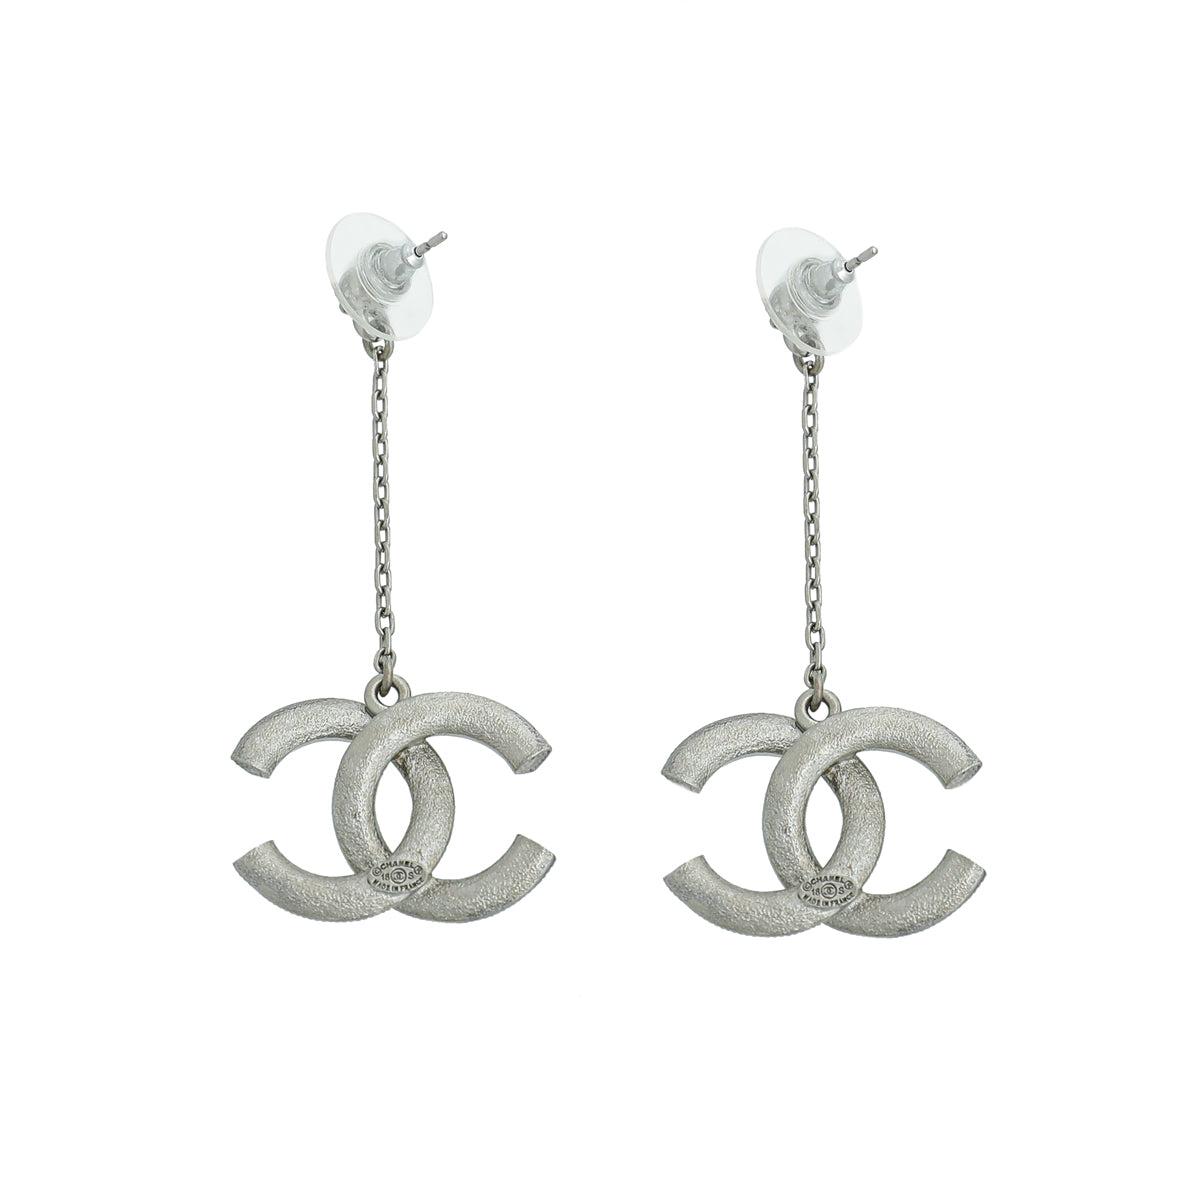 Chanel Silver CC Crystal Drop Chain Earrings